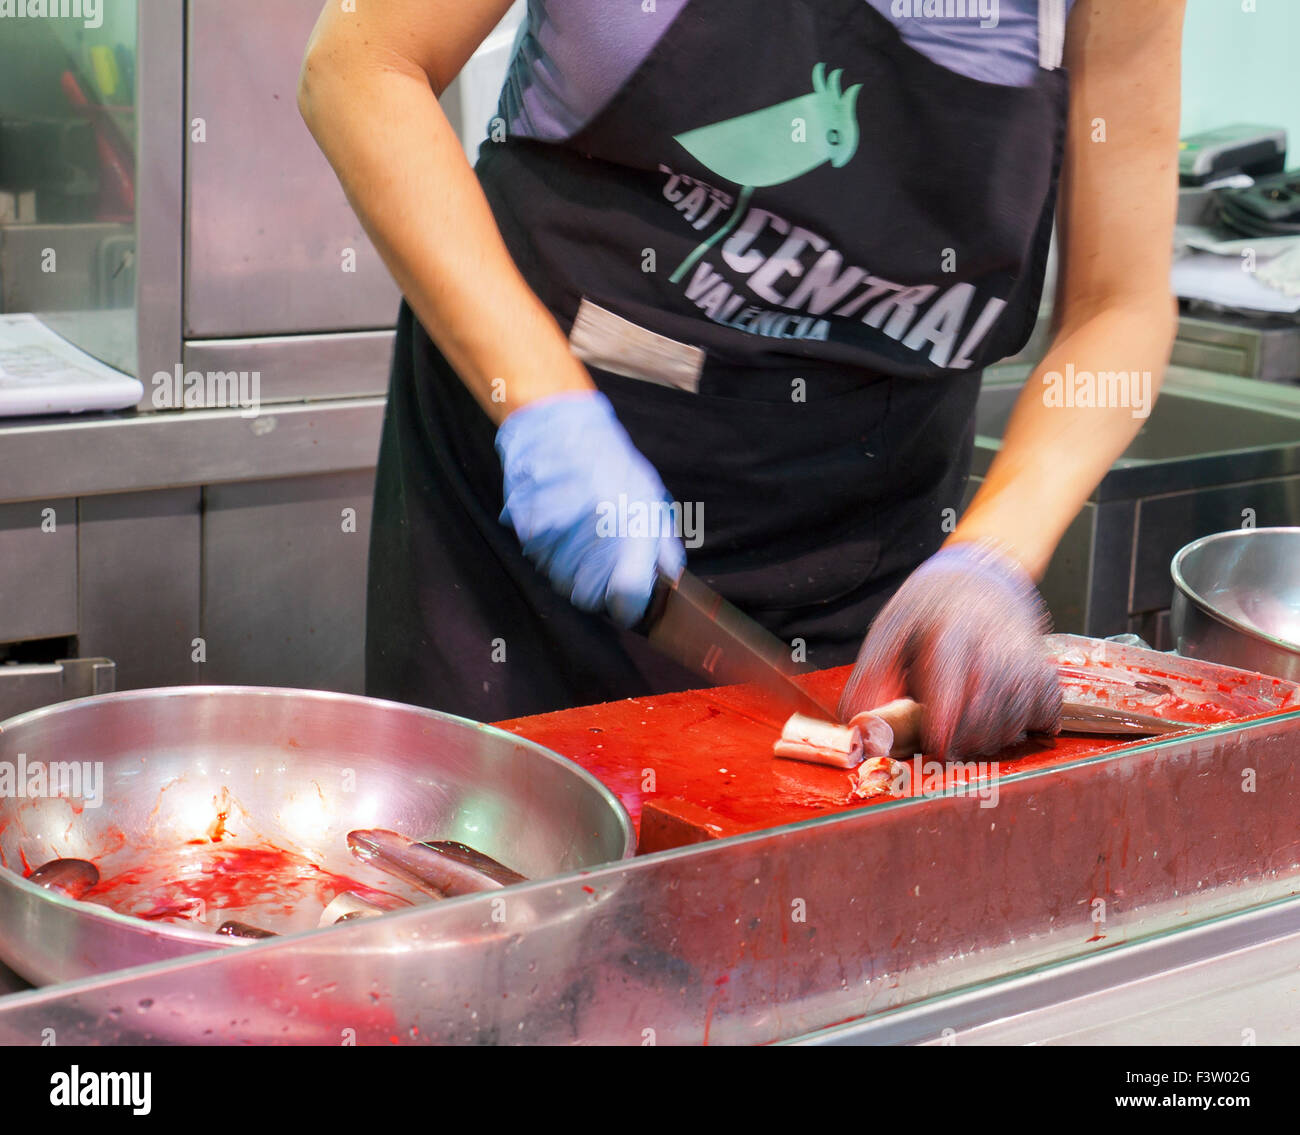 Fishmonger chopping live eels, Spanish market, Mercado Central Valencia. Stock Photo